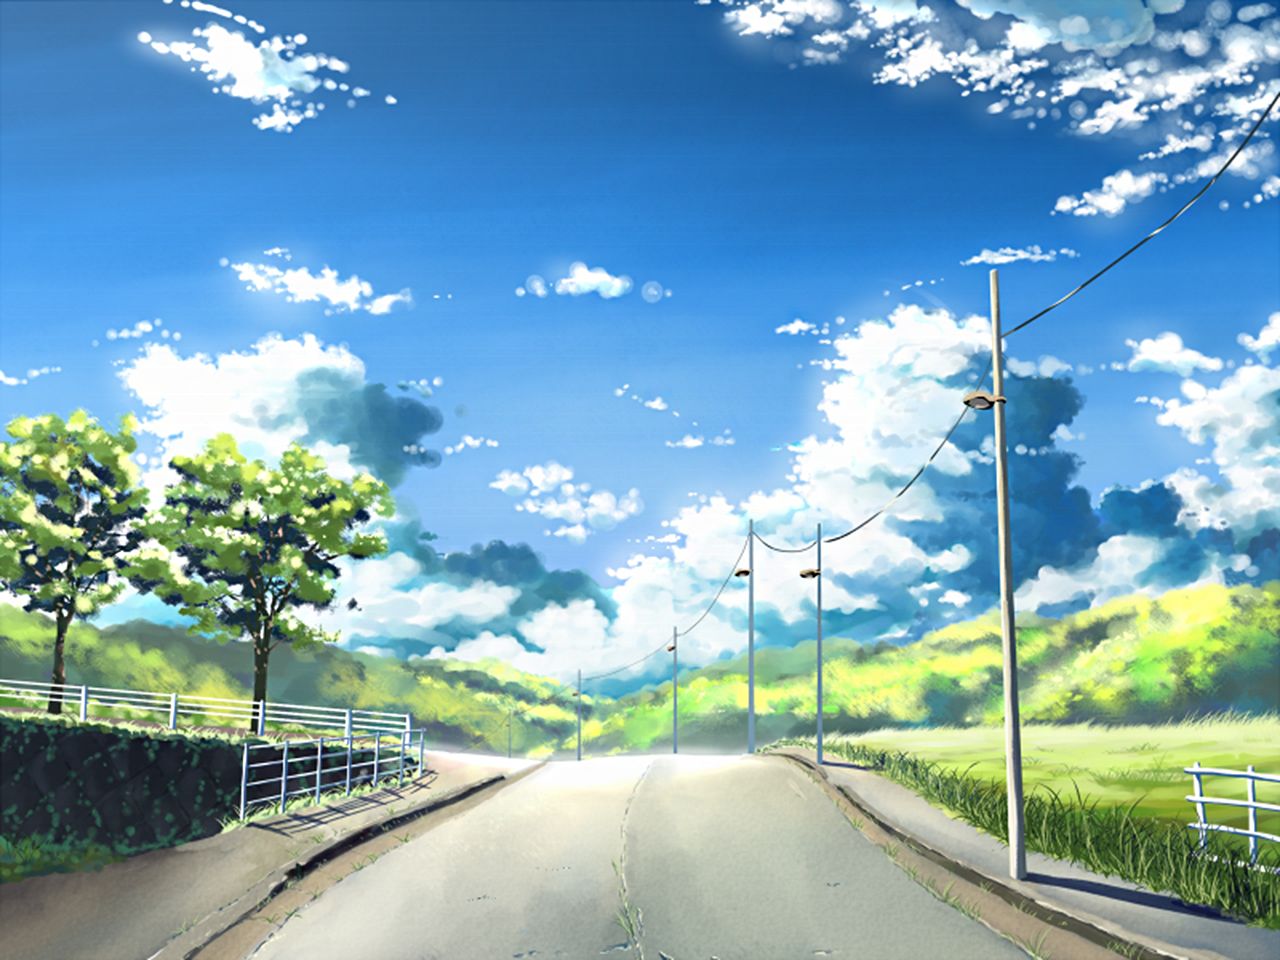 HD desktop wallpaper: Anime, Landscape, Grass, Sky, Sun, Road, Cloud  download free picture #1496623